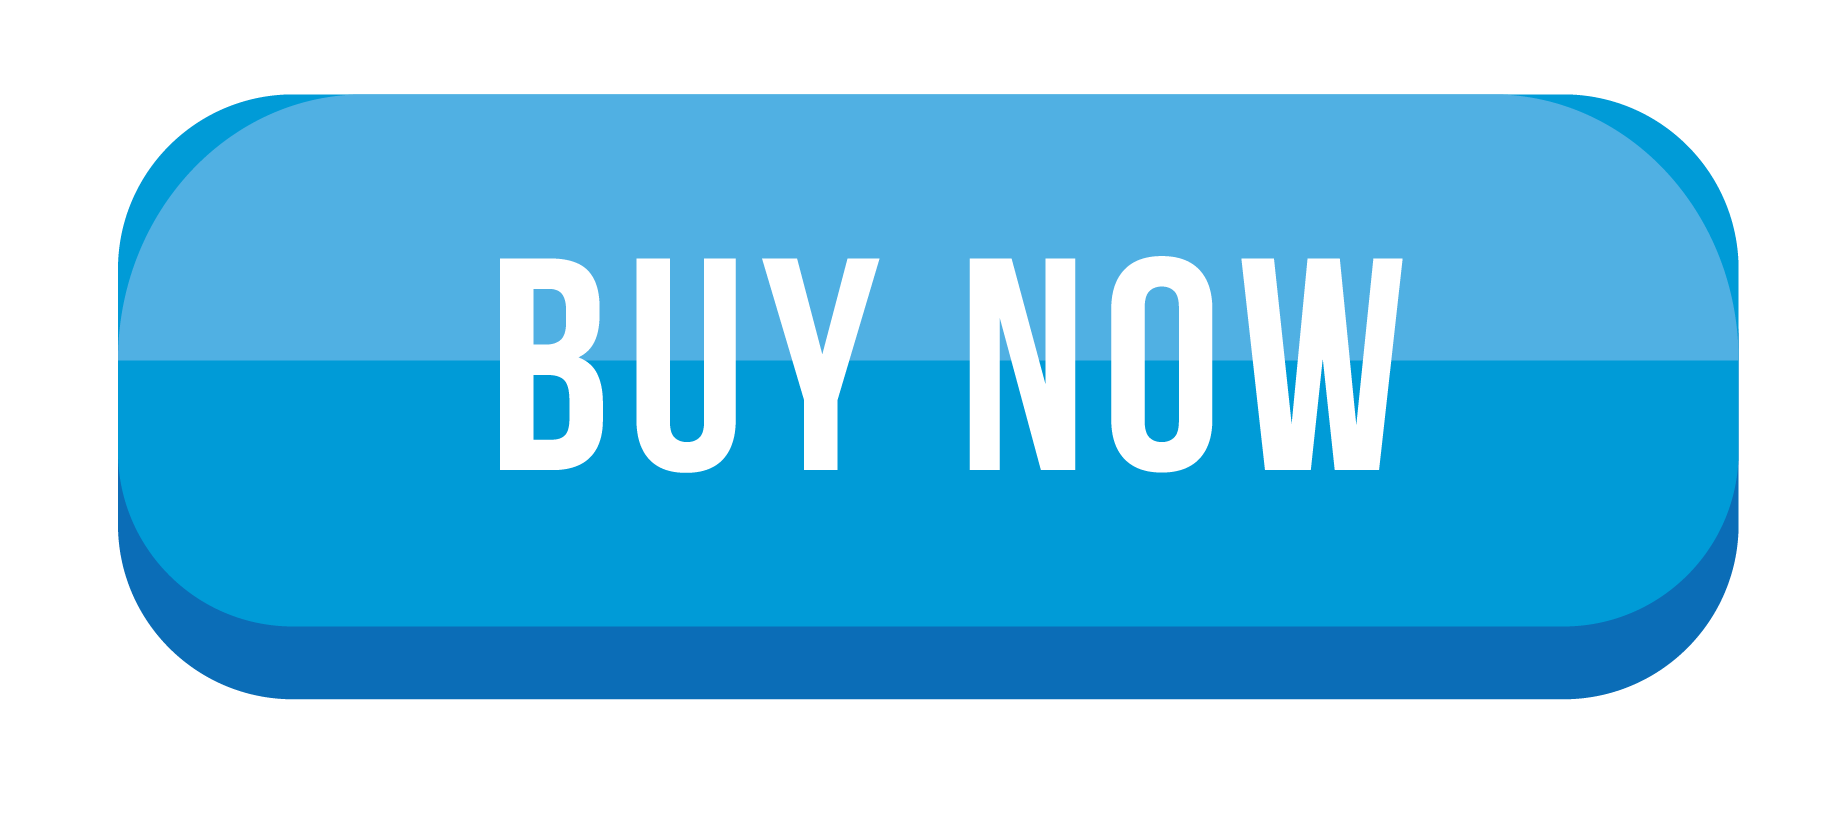 Download Buy Now Transparent HQ PNG Image | FreePNGImg